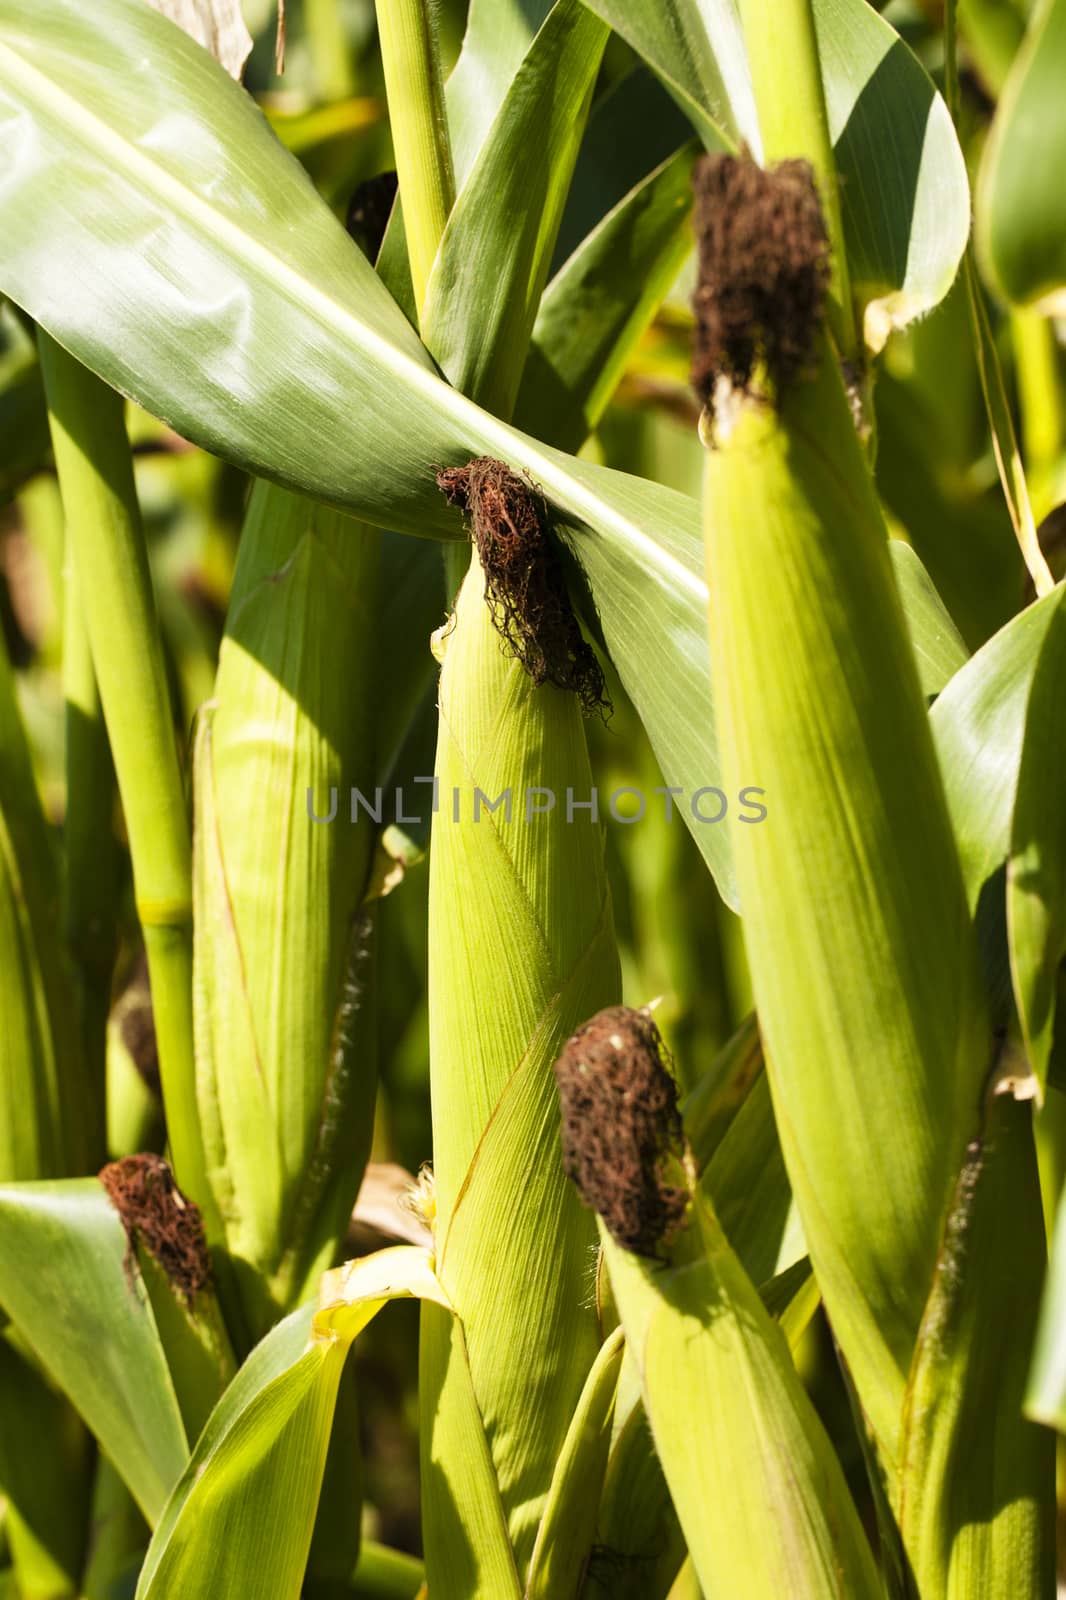 Mature corn   by avq